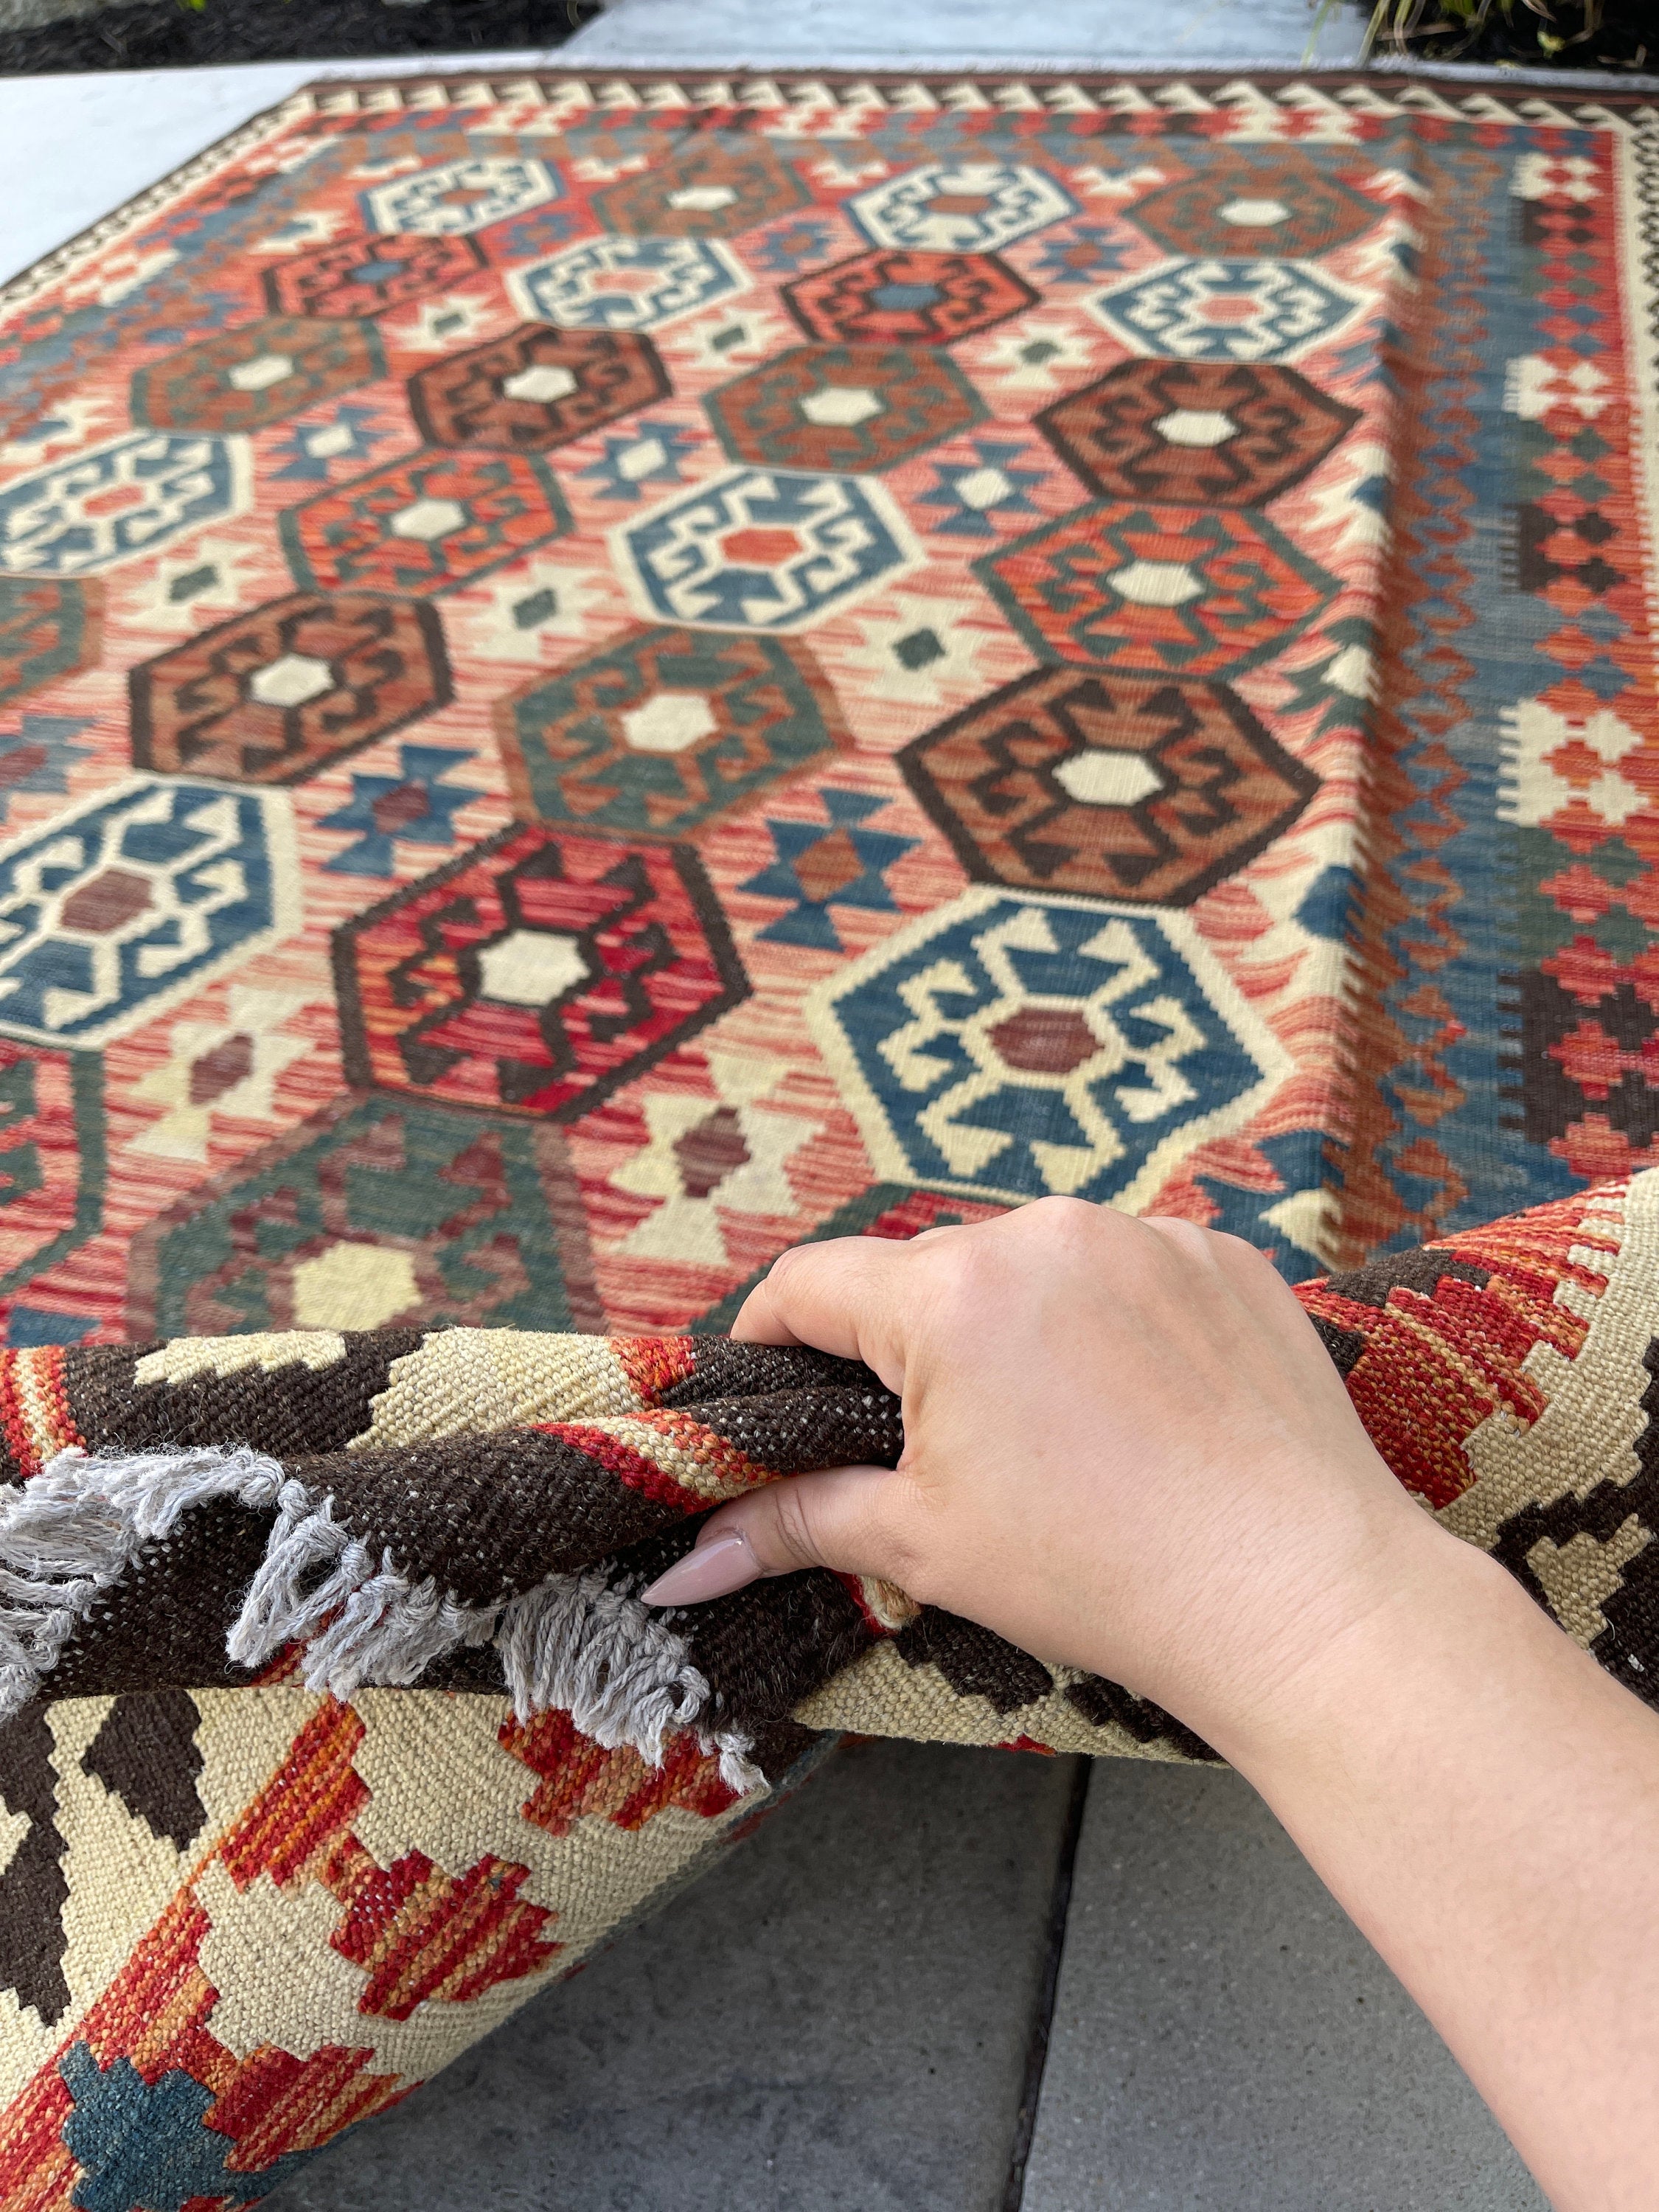 7x10 (215x305) Handmade Afghan Kilim Flatweave Rug | Red Blue Brown | Boho Tribal Moroccan Outdoor Wool Knotted Woven Jute Turkish